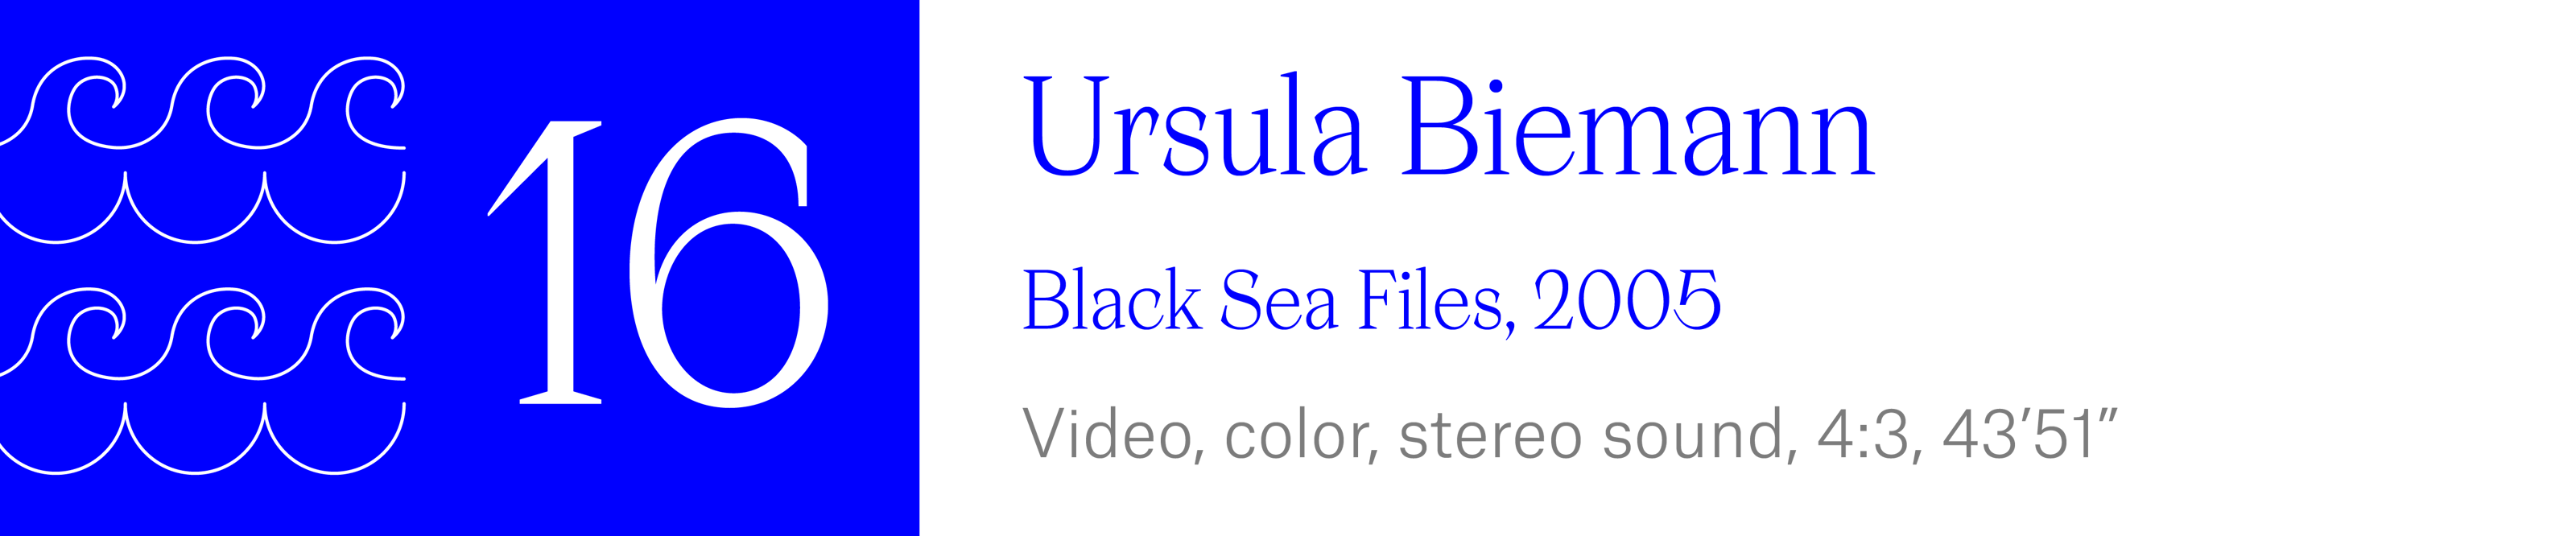 The Wave (16) Ursula Biemann - Black Sea Files, 2005. Video, color, stereo sound, 4:3 aspect ratio, 43 minutes, 51 seconds.